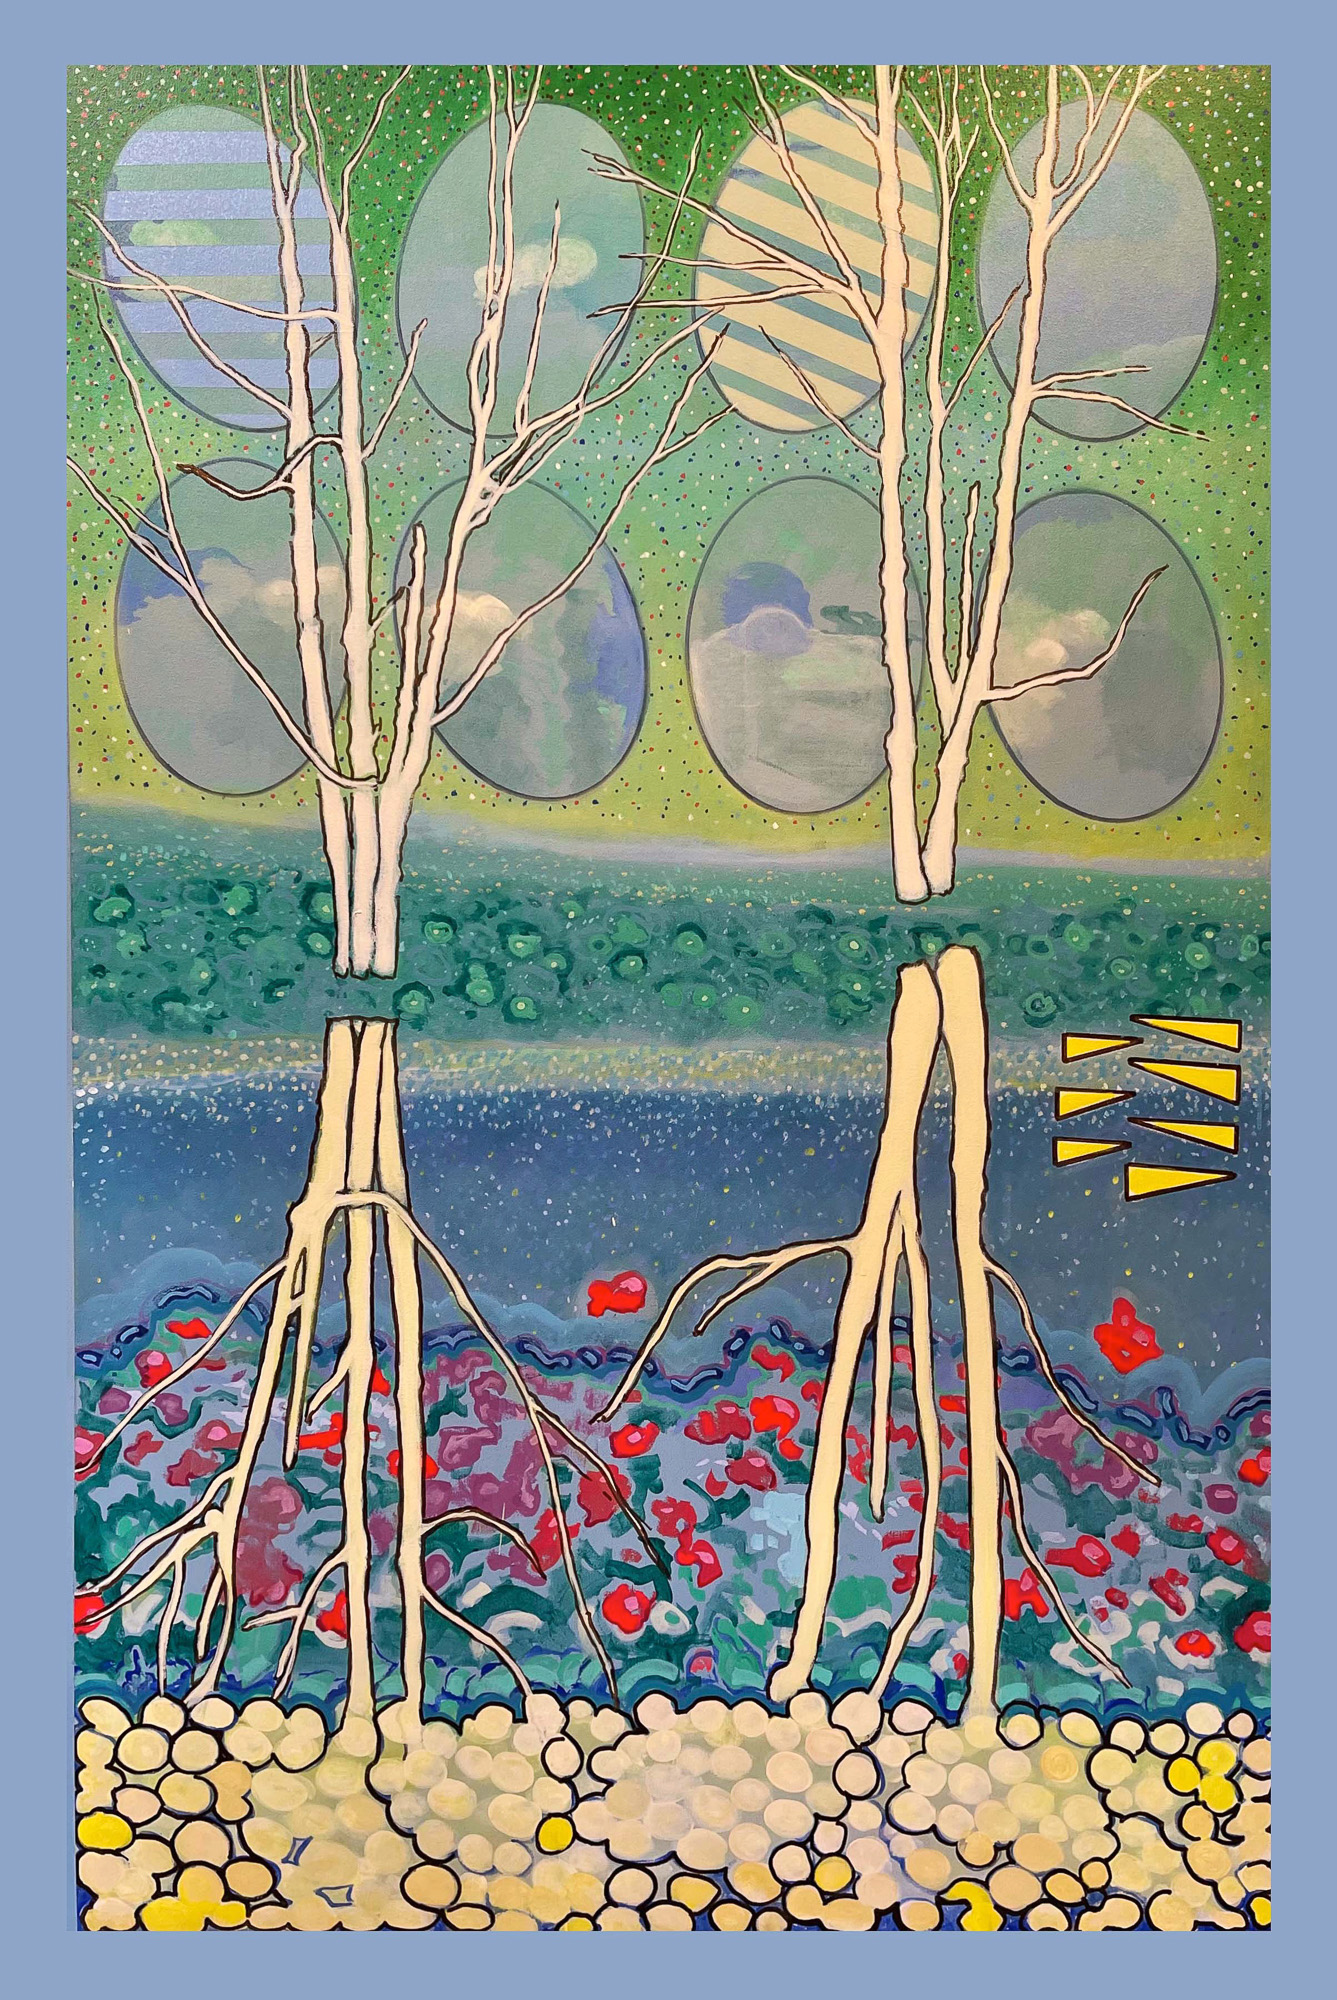 WIINTER TREES, acrylic on canvas, 60"x40", 2021